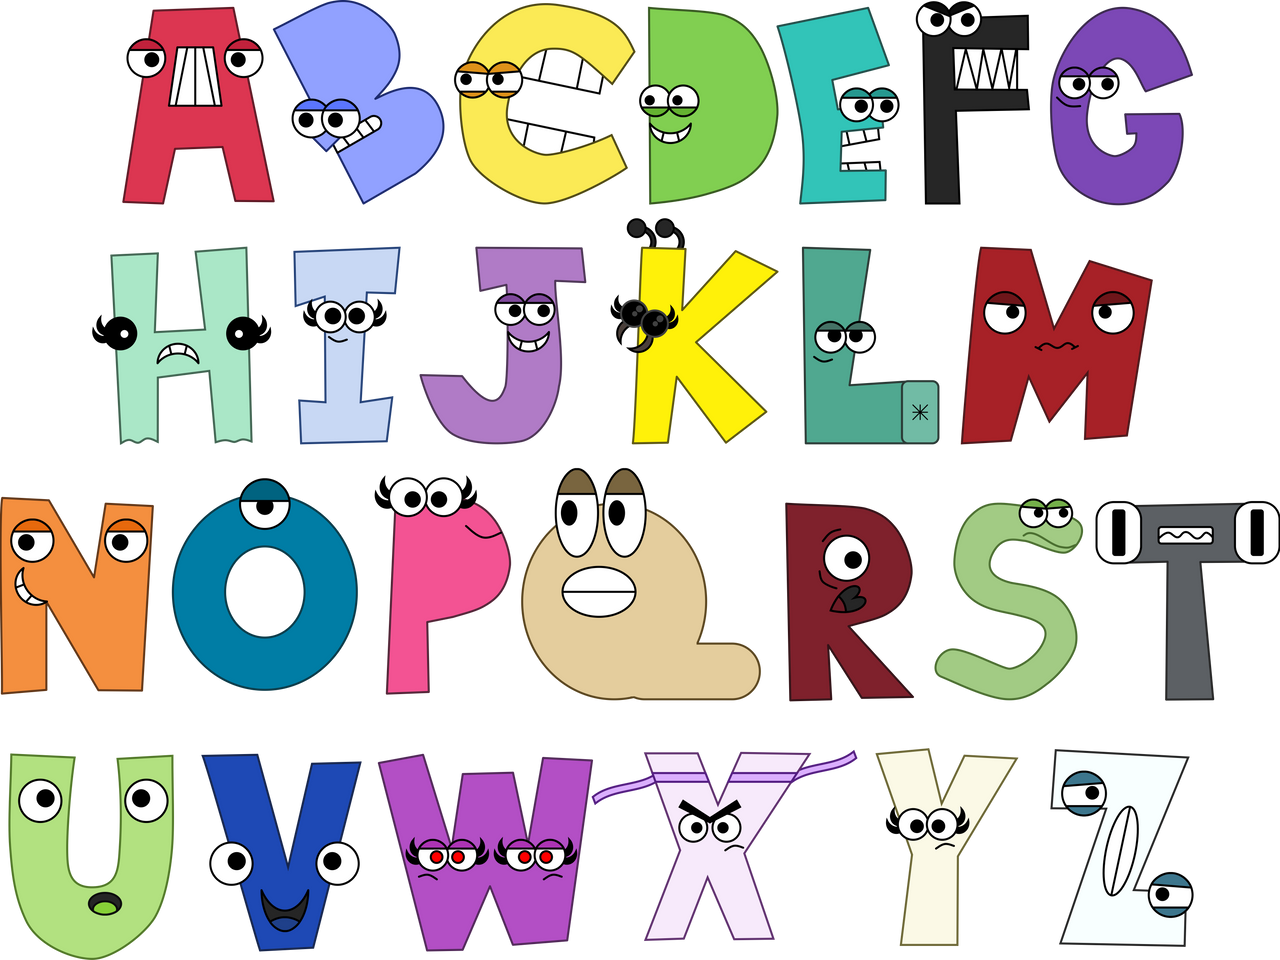 B - Alphabet Lore Color Style by MAKCF2014 on DeviantArt